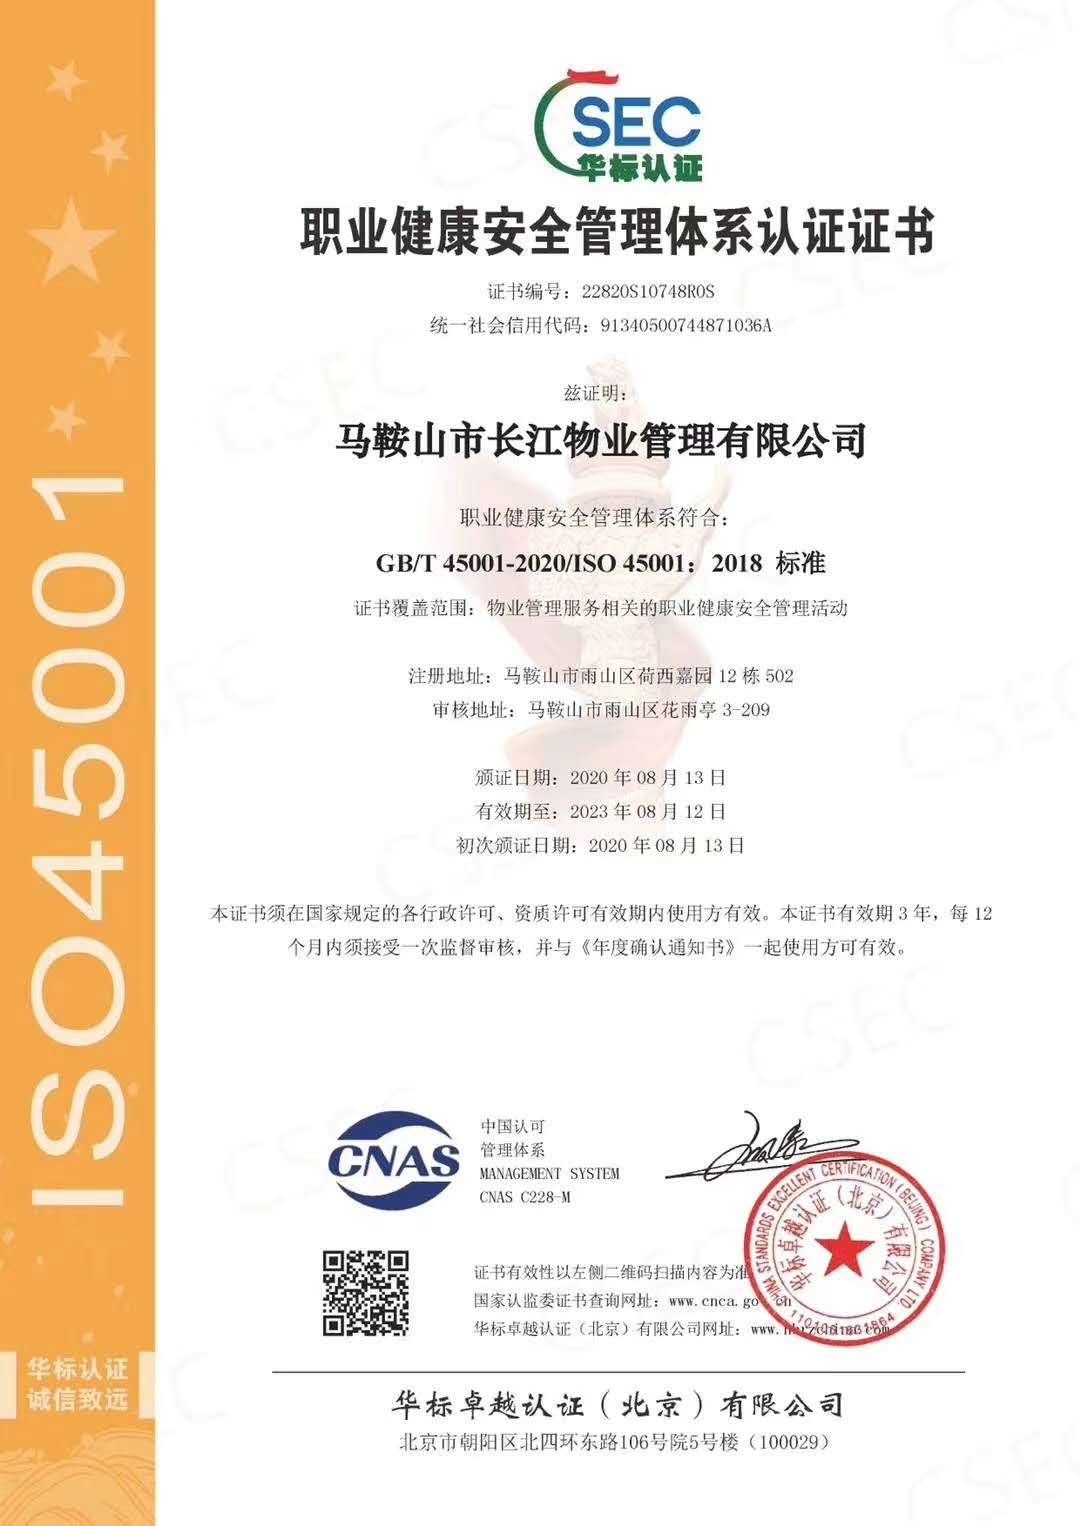 瓊海ISO 45001認證